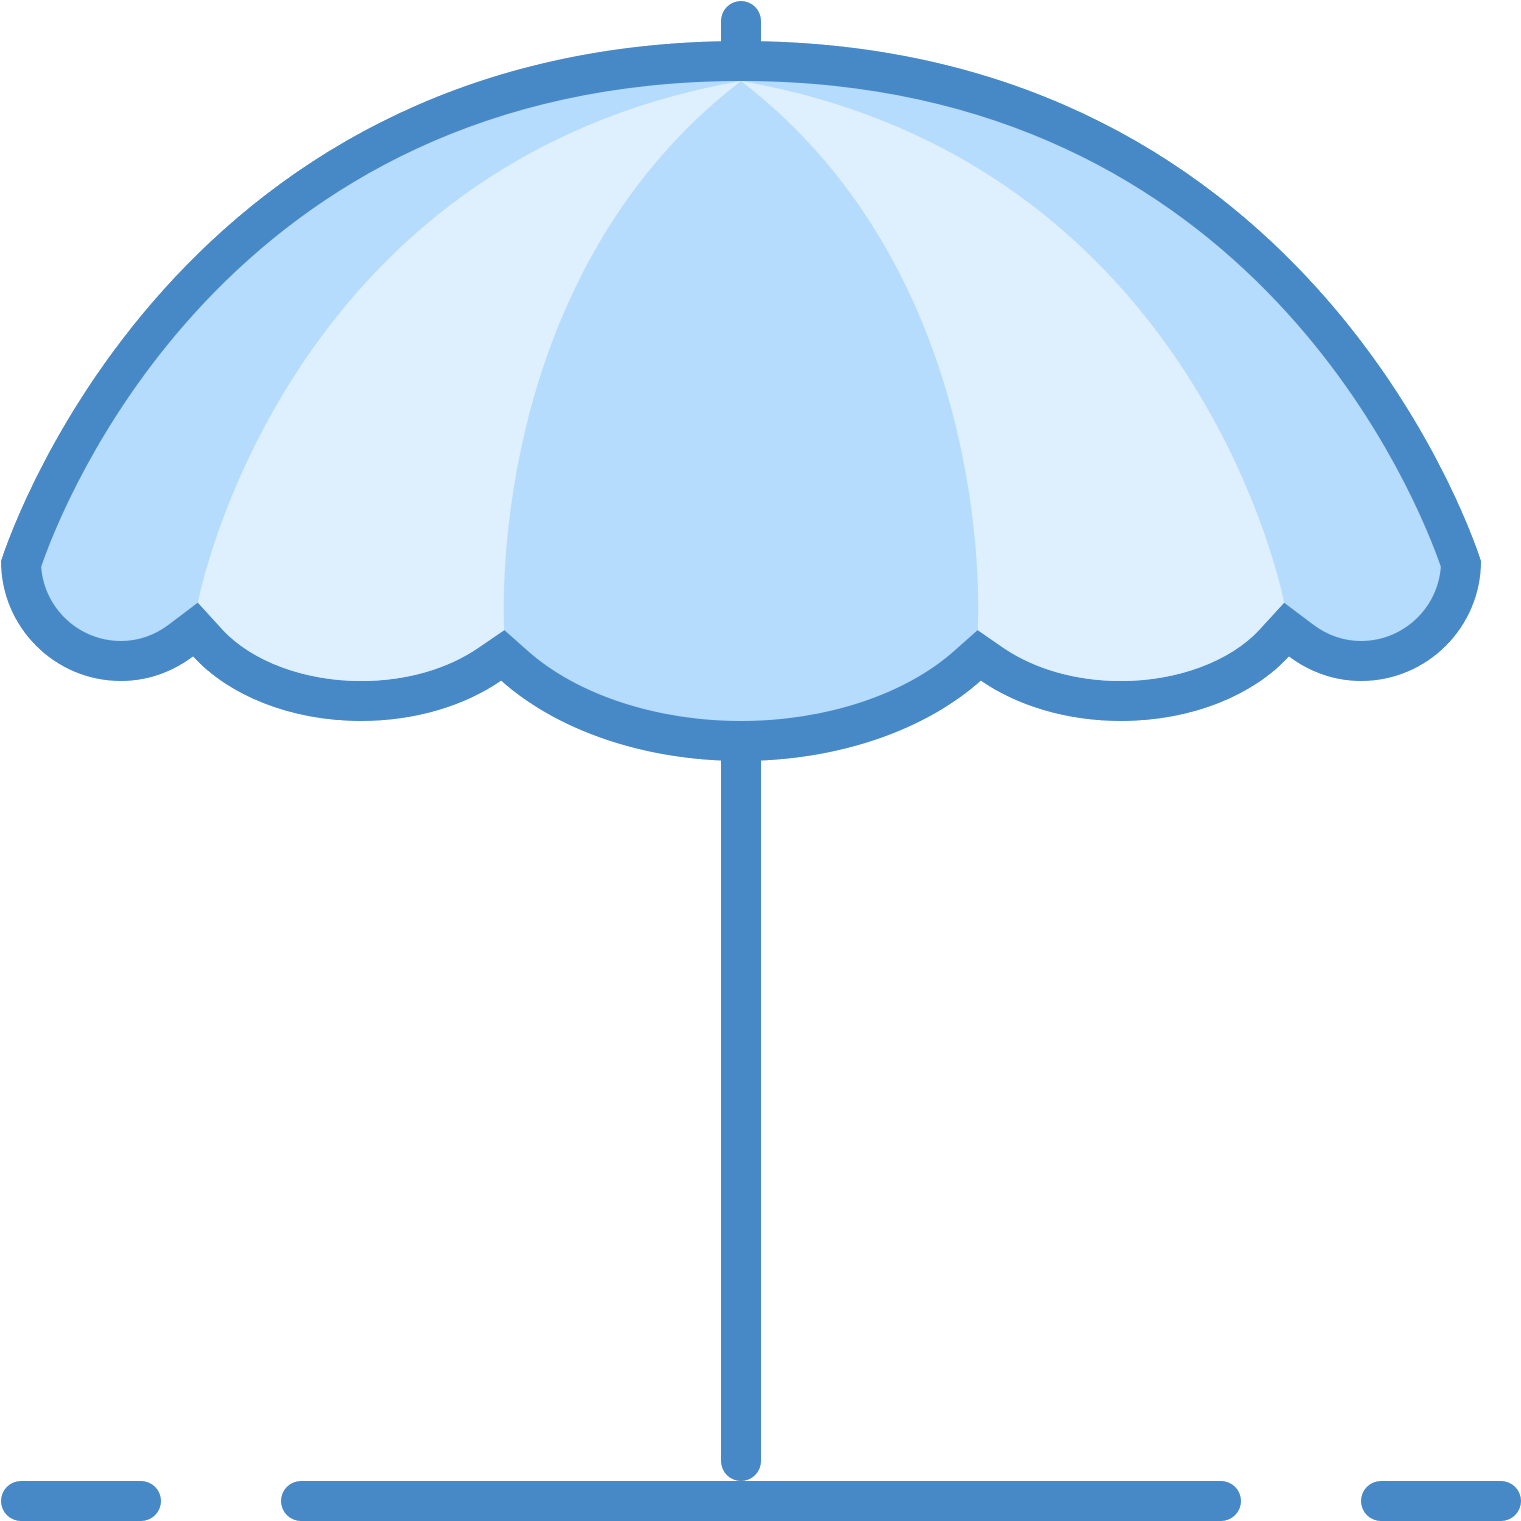 A Blue And White Umbrella